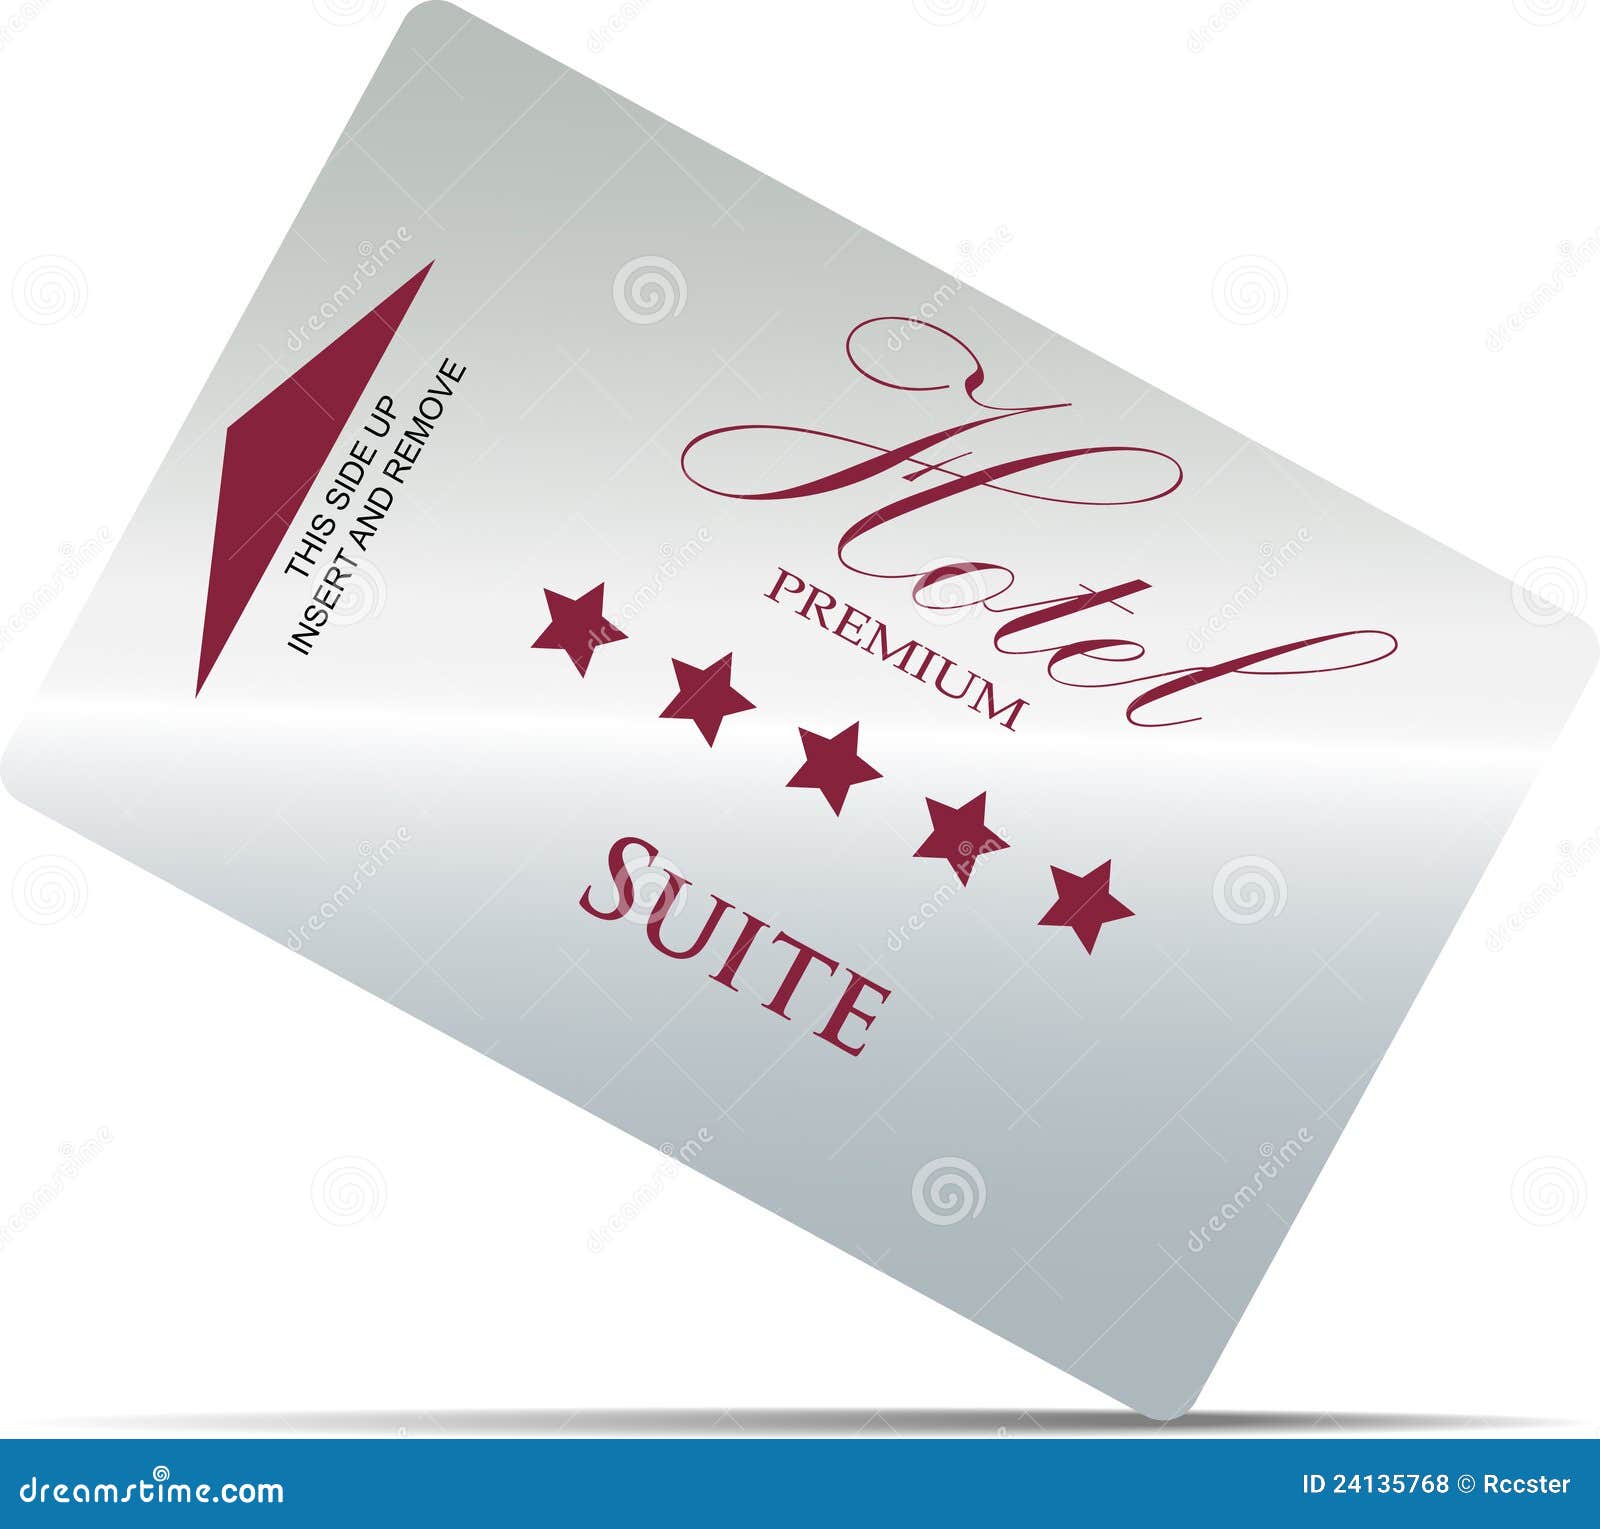 hotel room key card